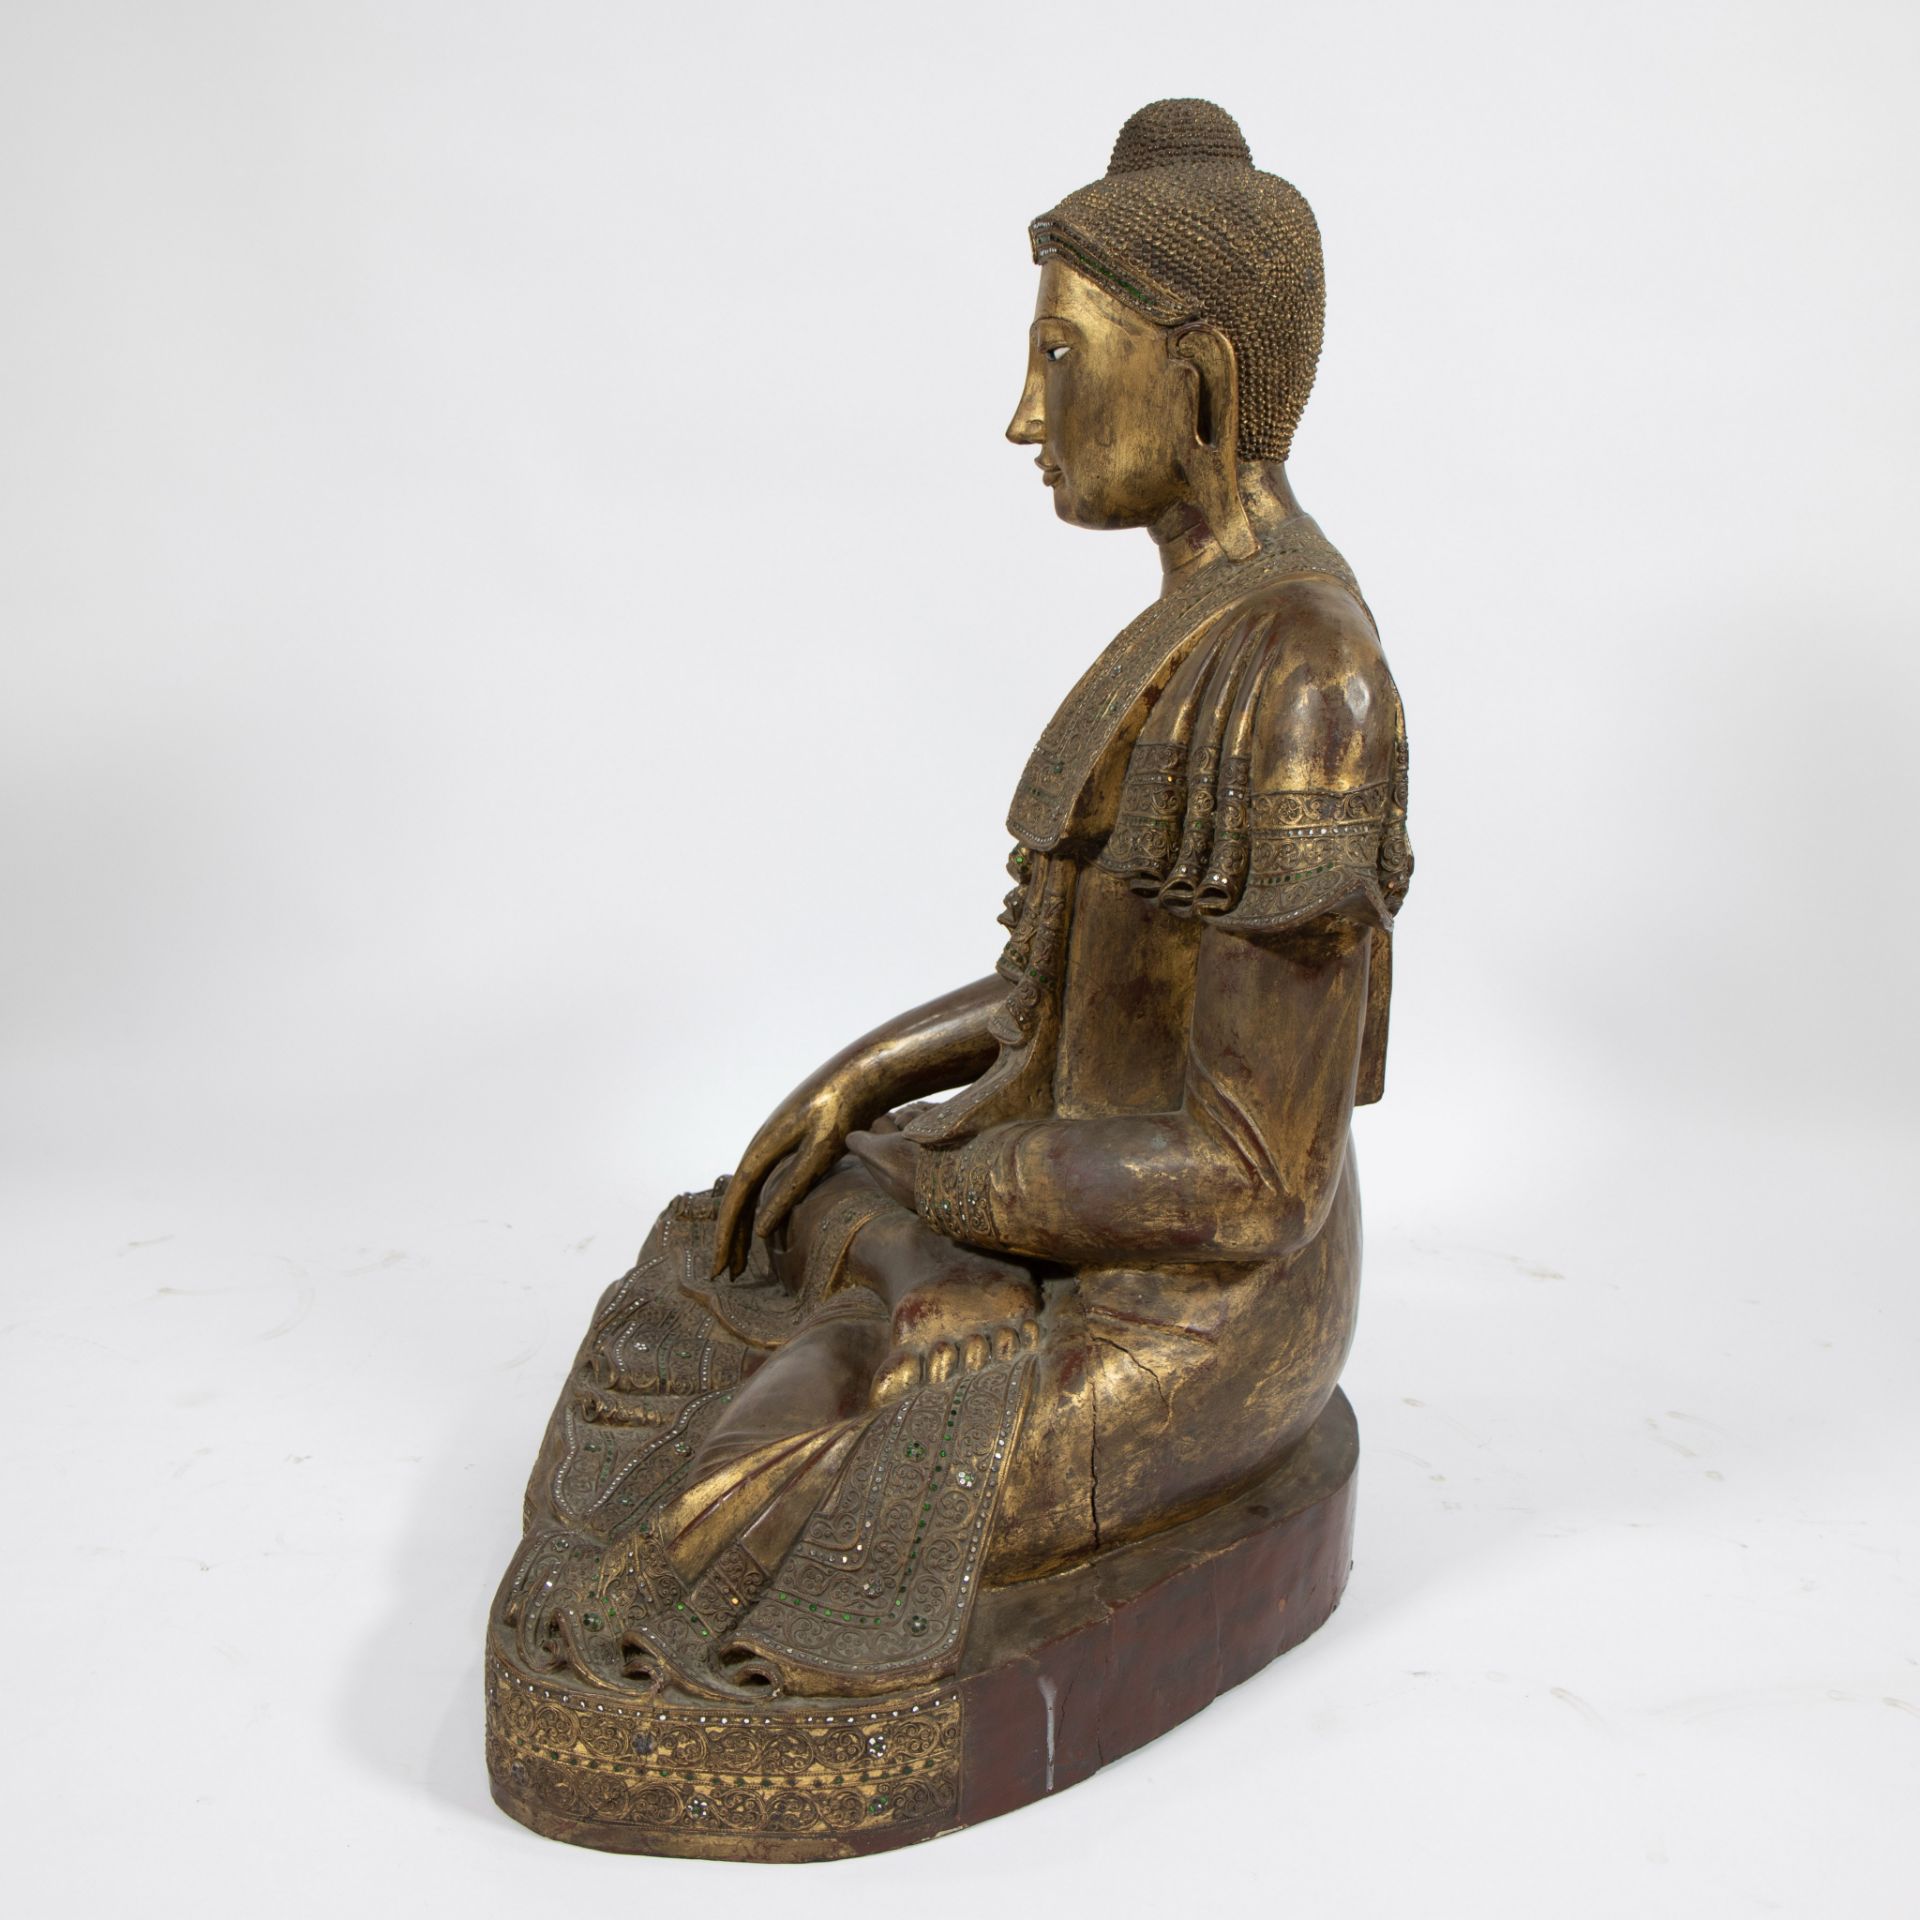 Giltwood and jeweled Burmese seated Buddha - Image 2 of 4